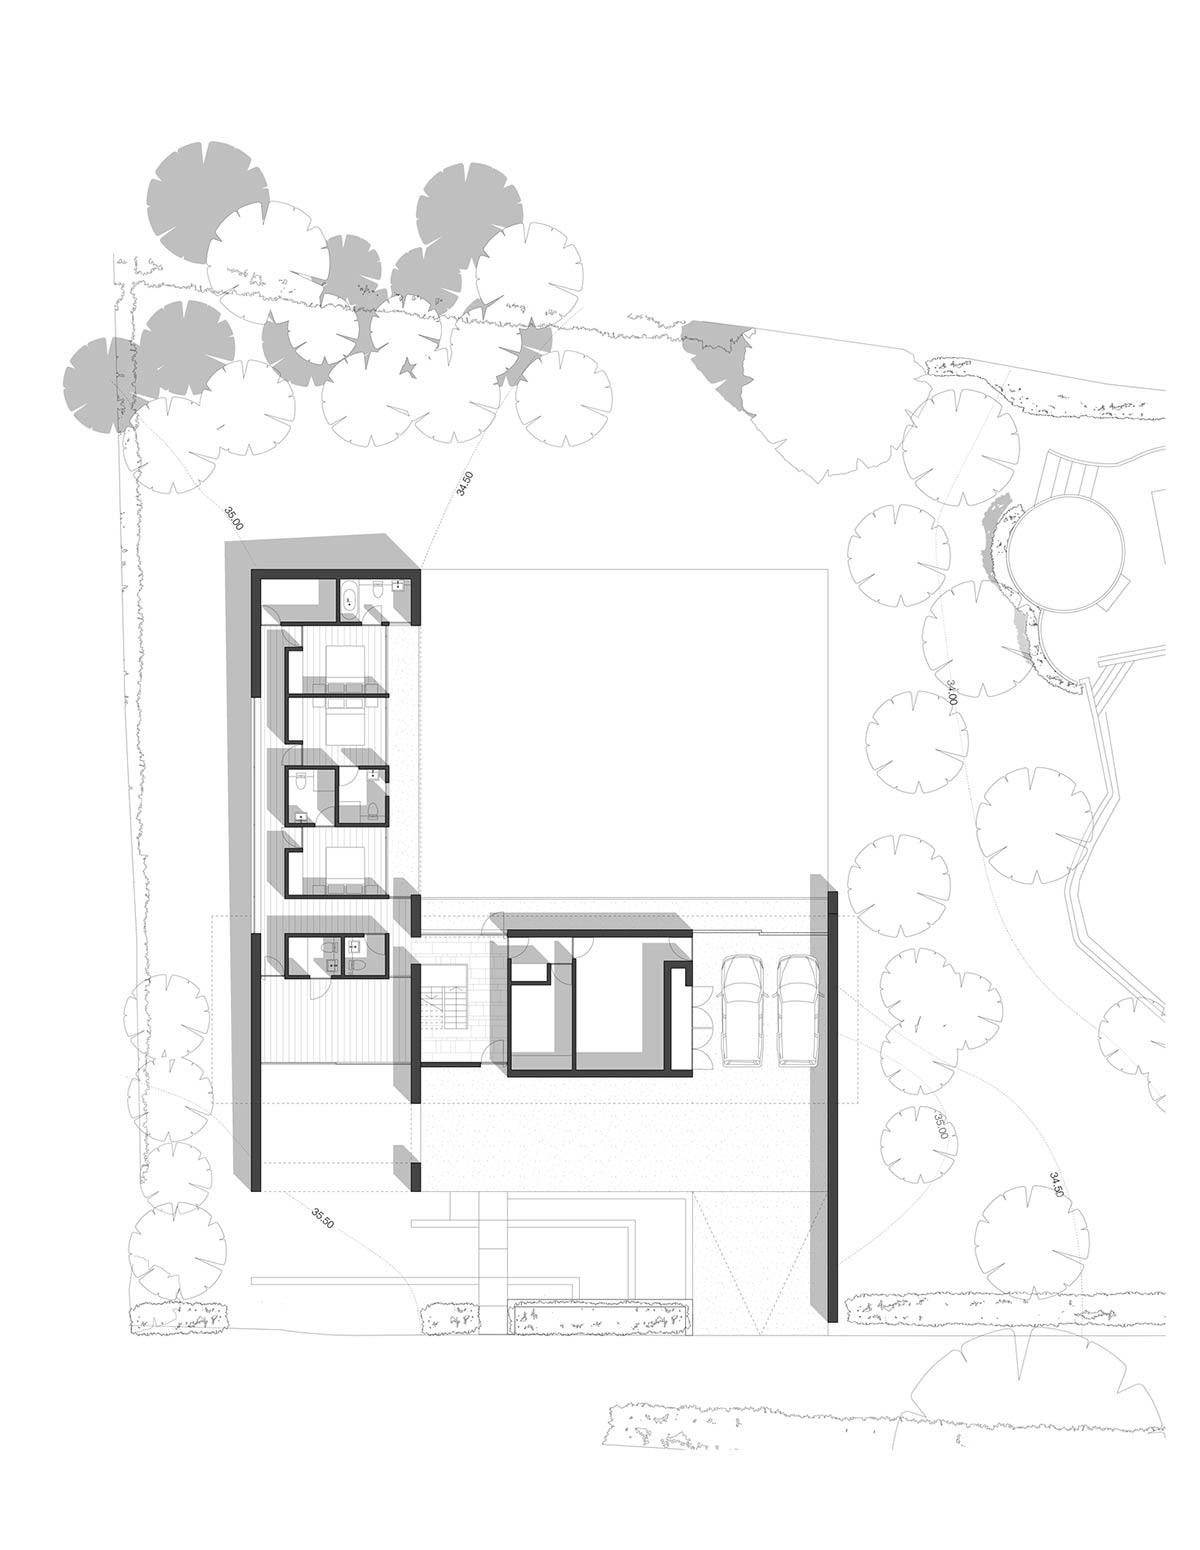 Plan, Hurst House, Buckinghamshire by John Pardey Architects + Strom Architects